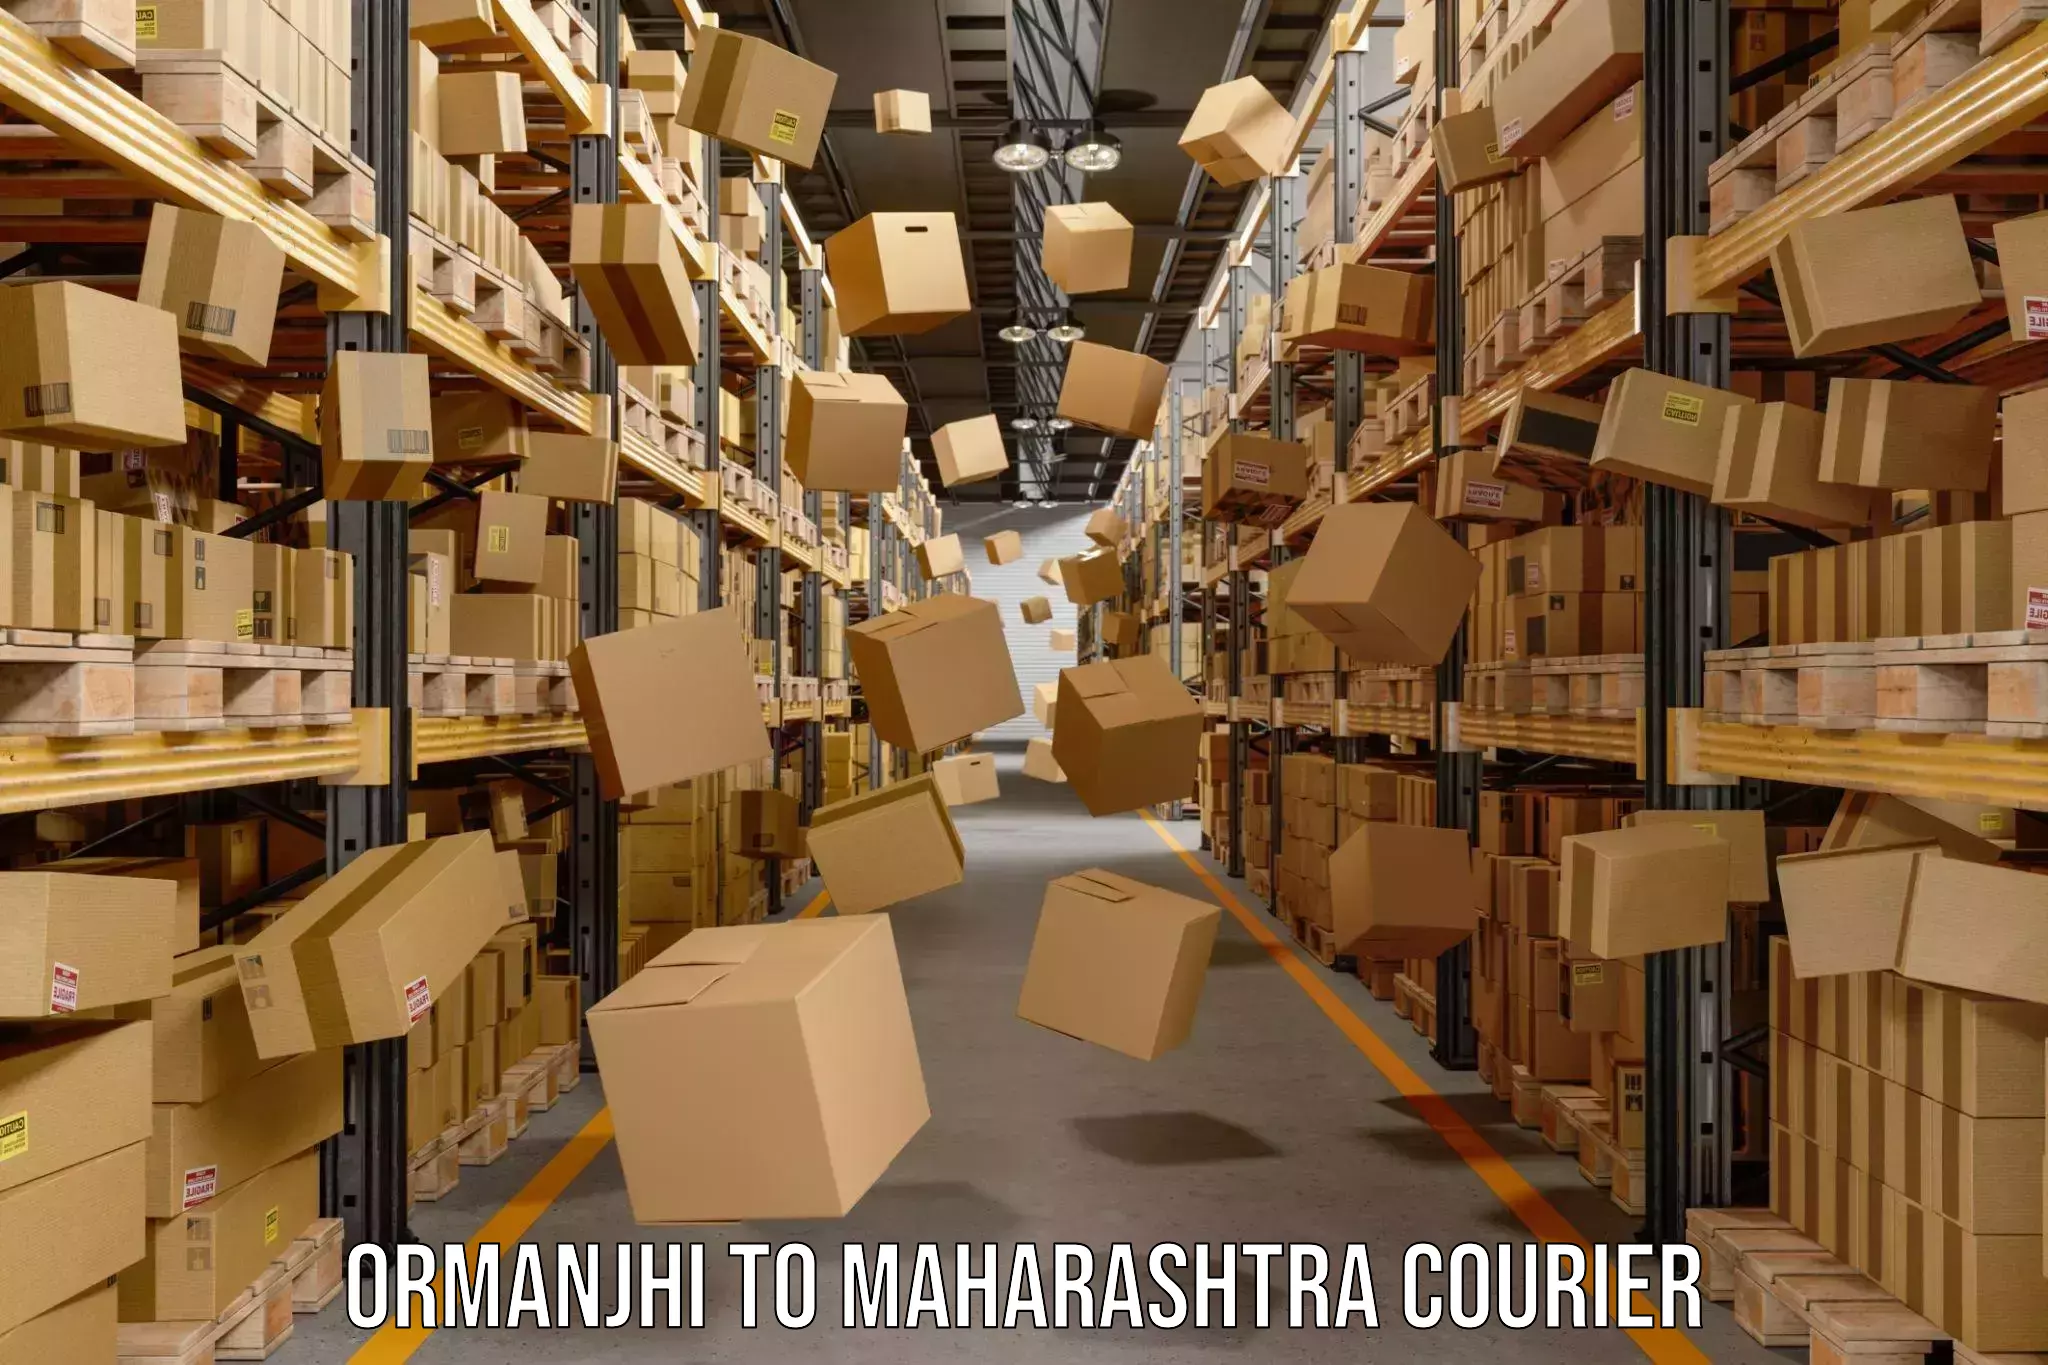 Pharmaceutical courier in Ormanjhi to Maharashtra